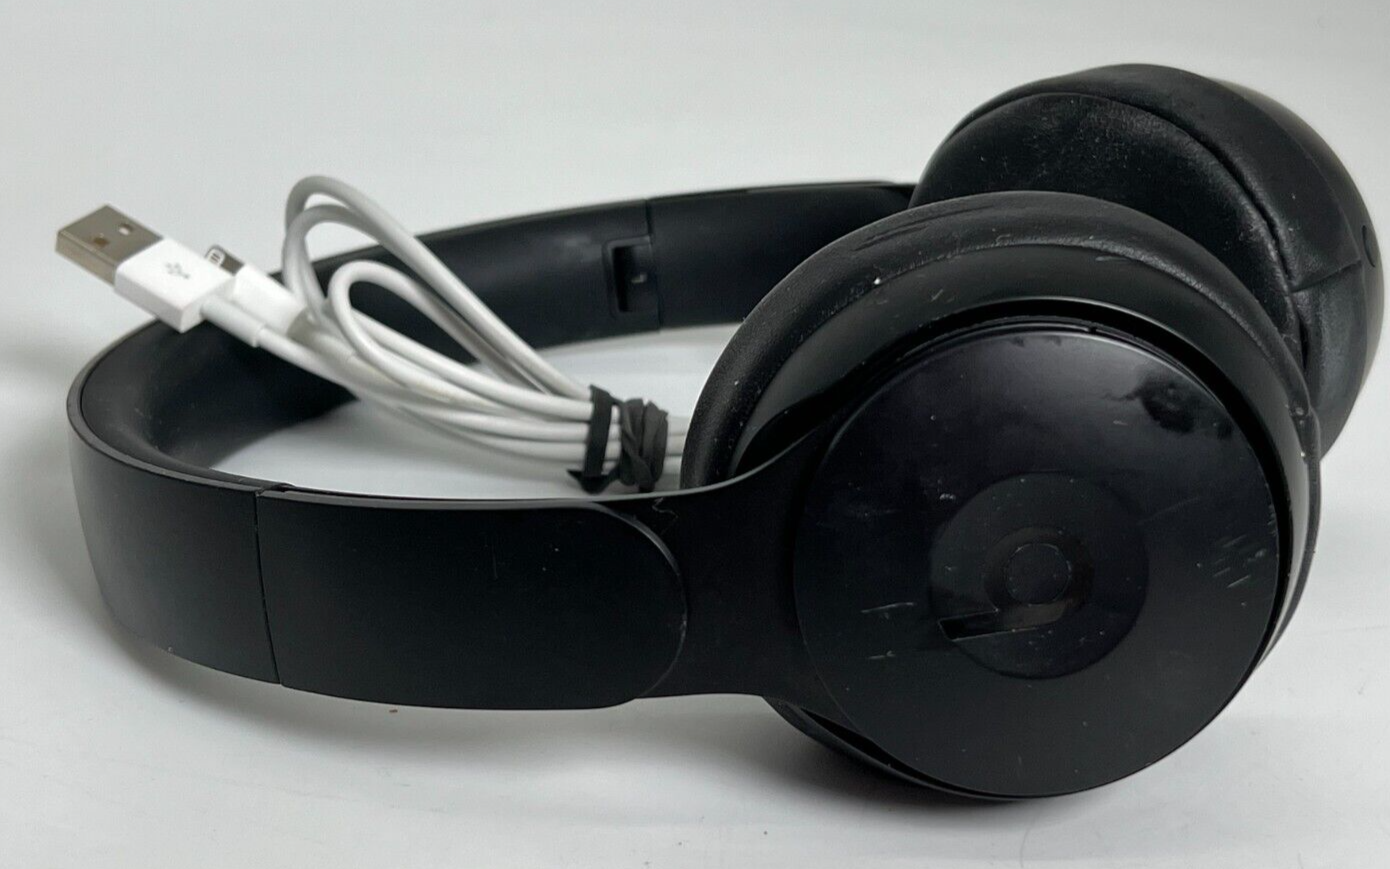 Primary image for Beats Solo Pro A1881 Wireless On-ear Headband Headphones - Black